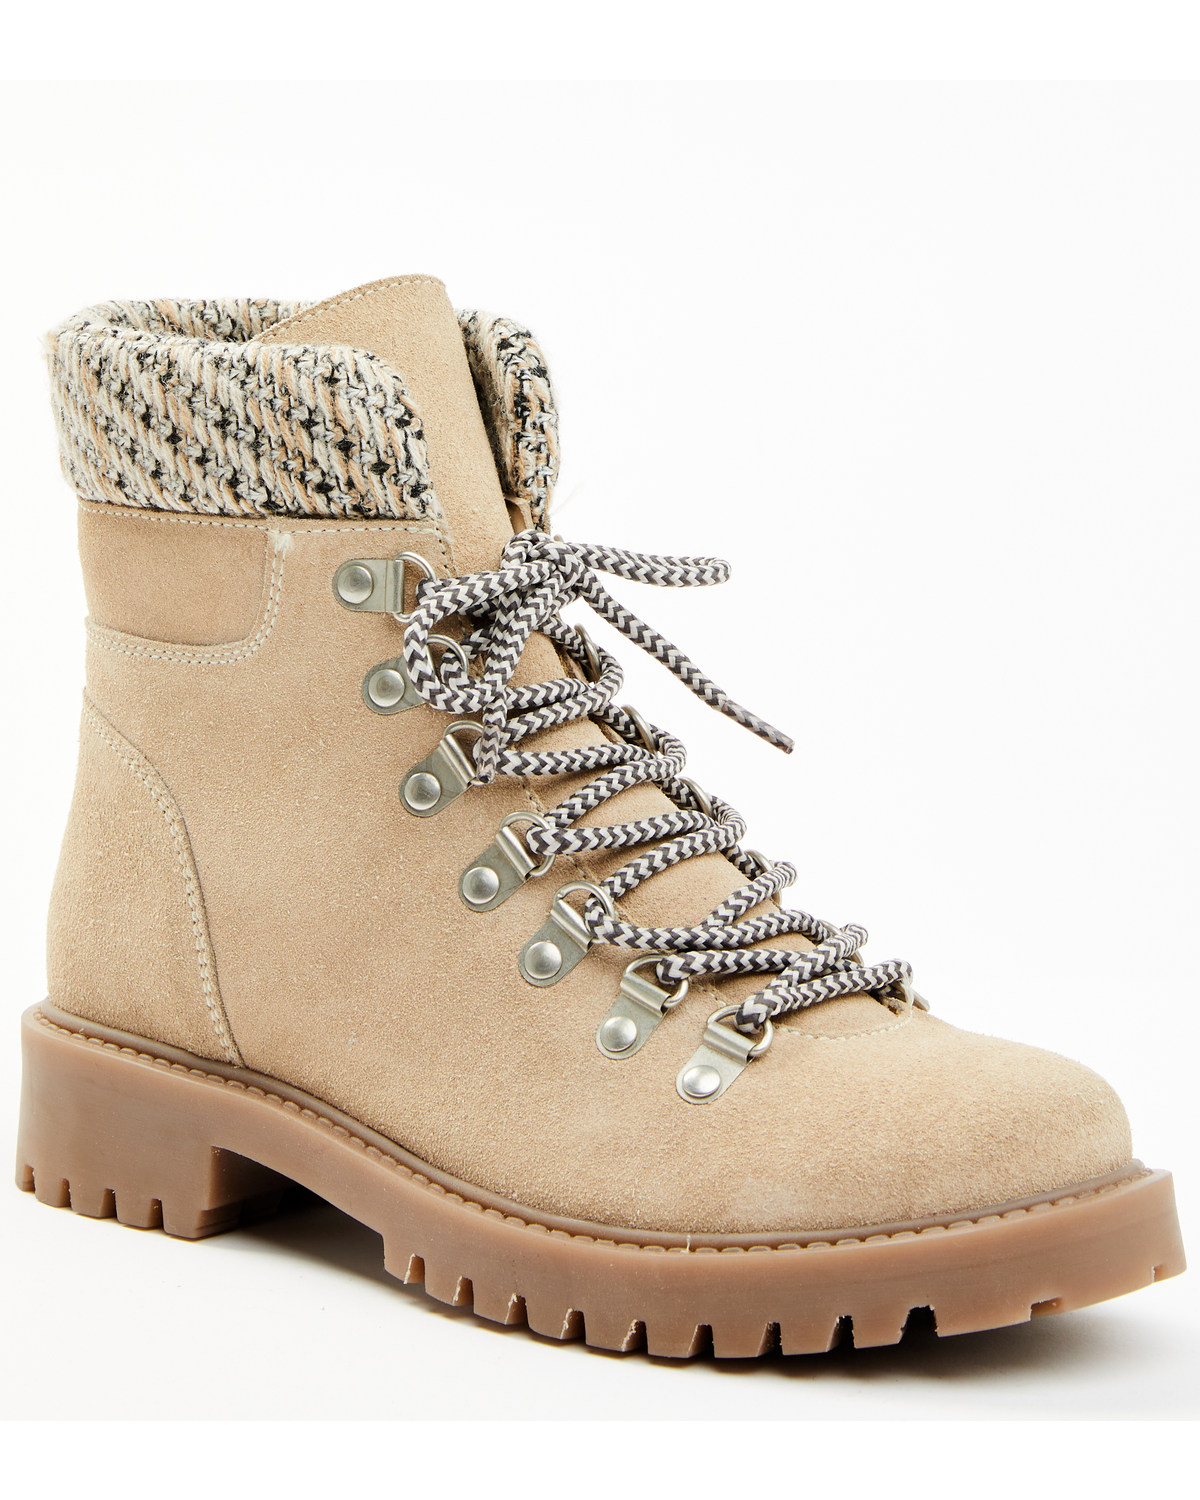 Cleo + Wolf Women's Fashion Hiker Boots - Soft Toe